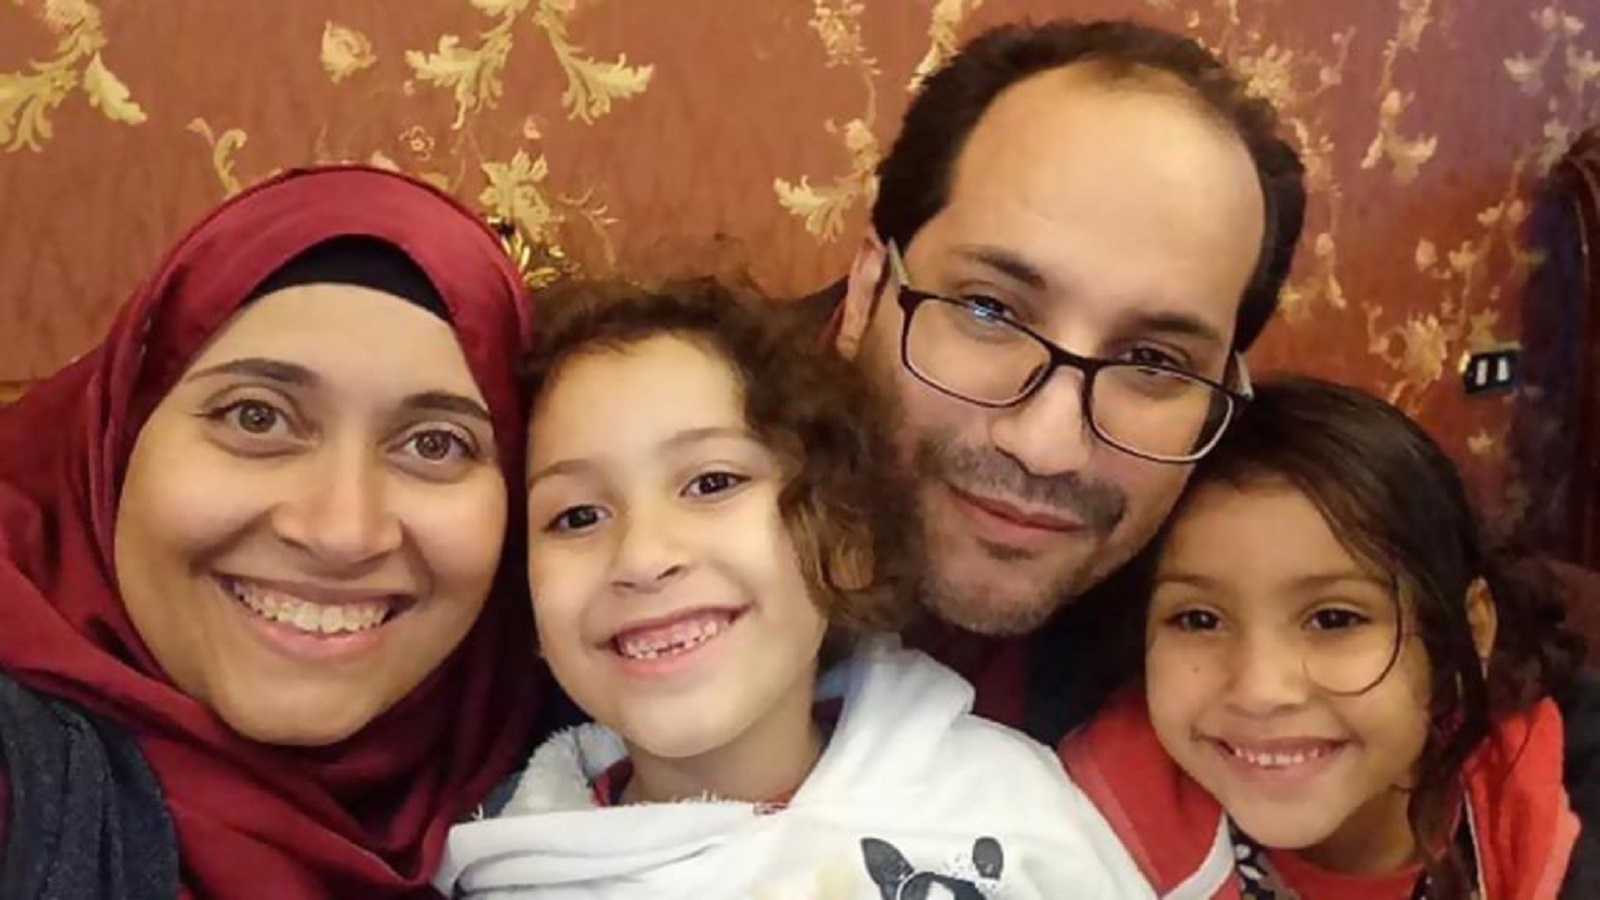 صحافي مصري معتقل وزوجته "للناس": اهتموا بابنتيّ!